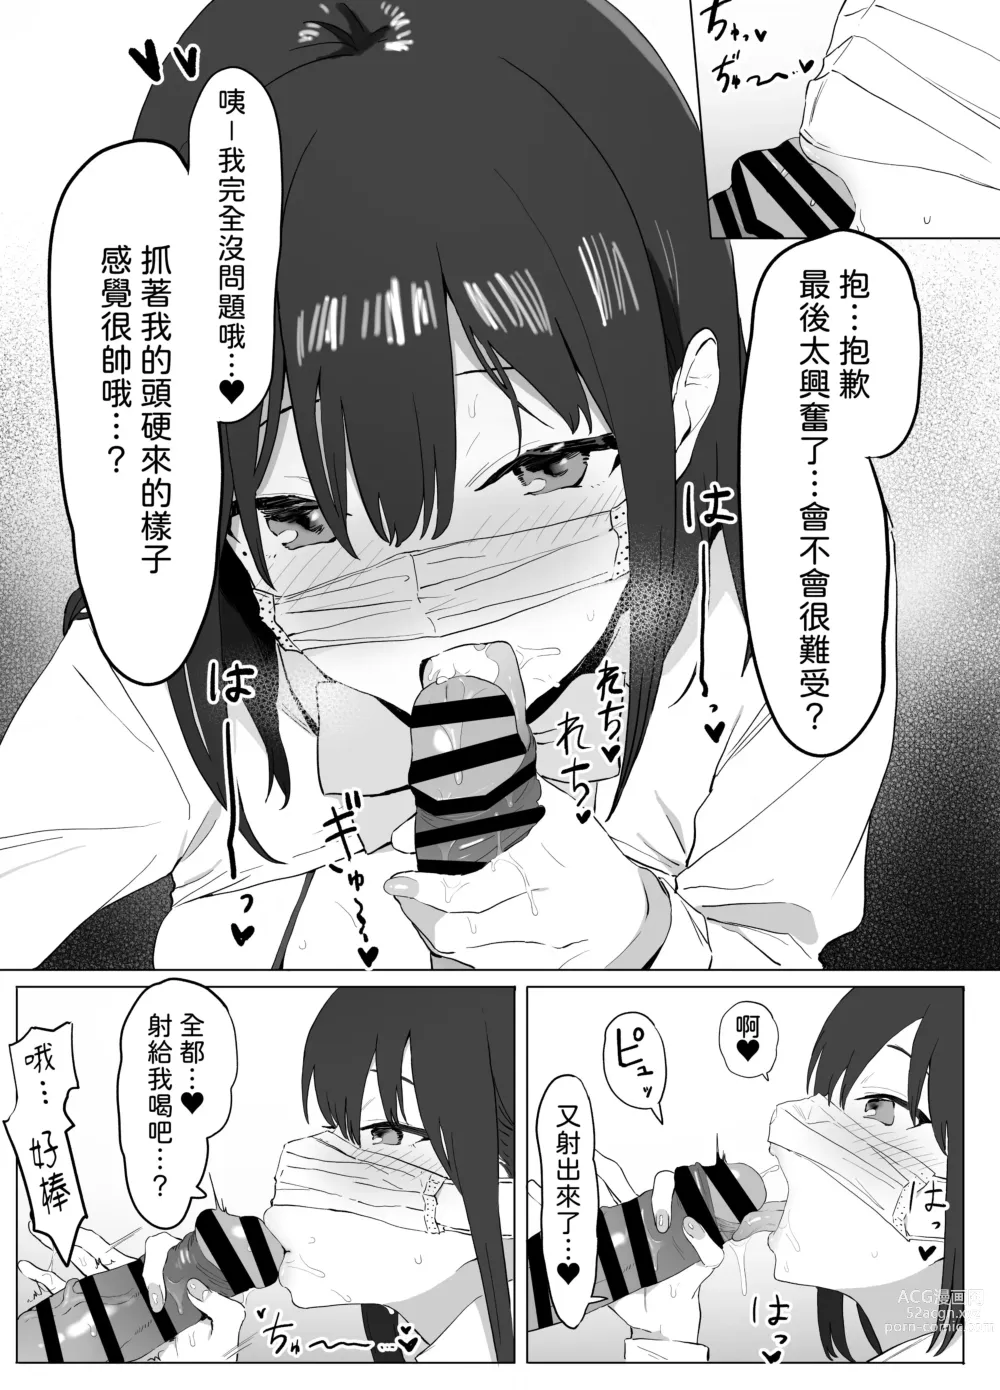 Page 12 of doujinshi Seikoui Jisshuu!